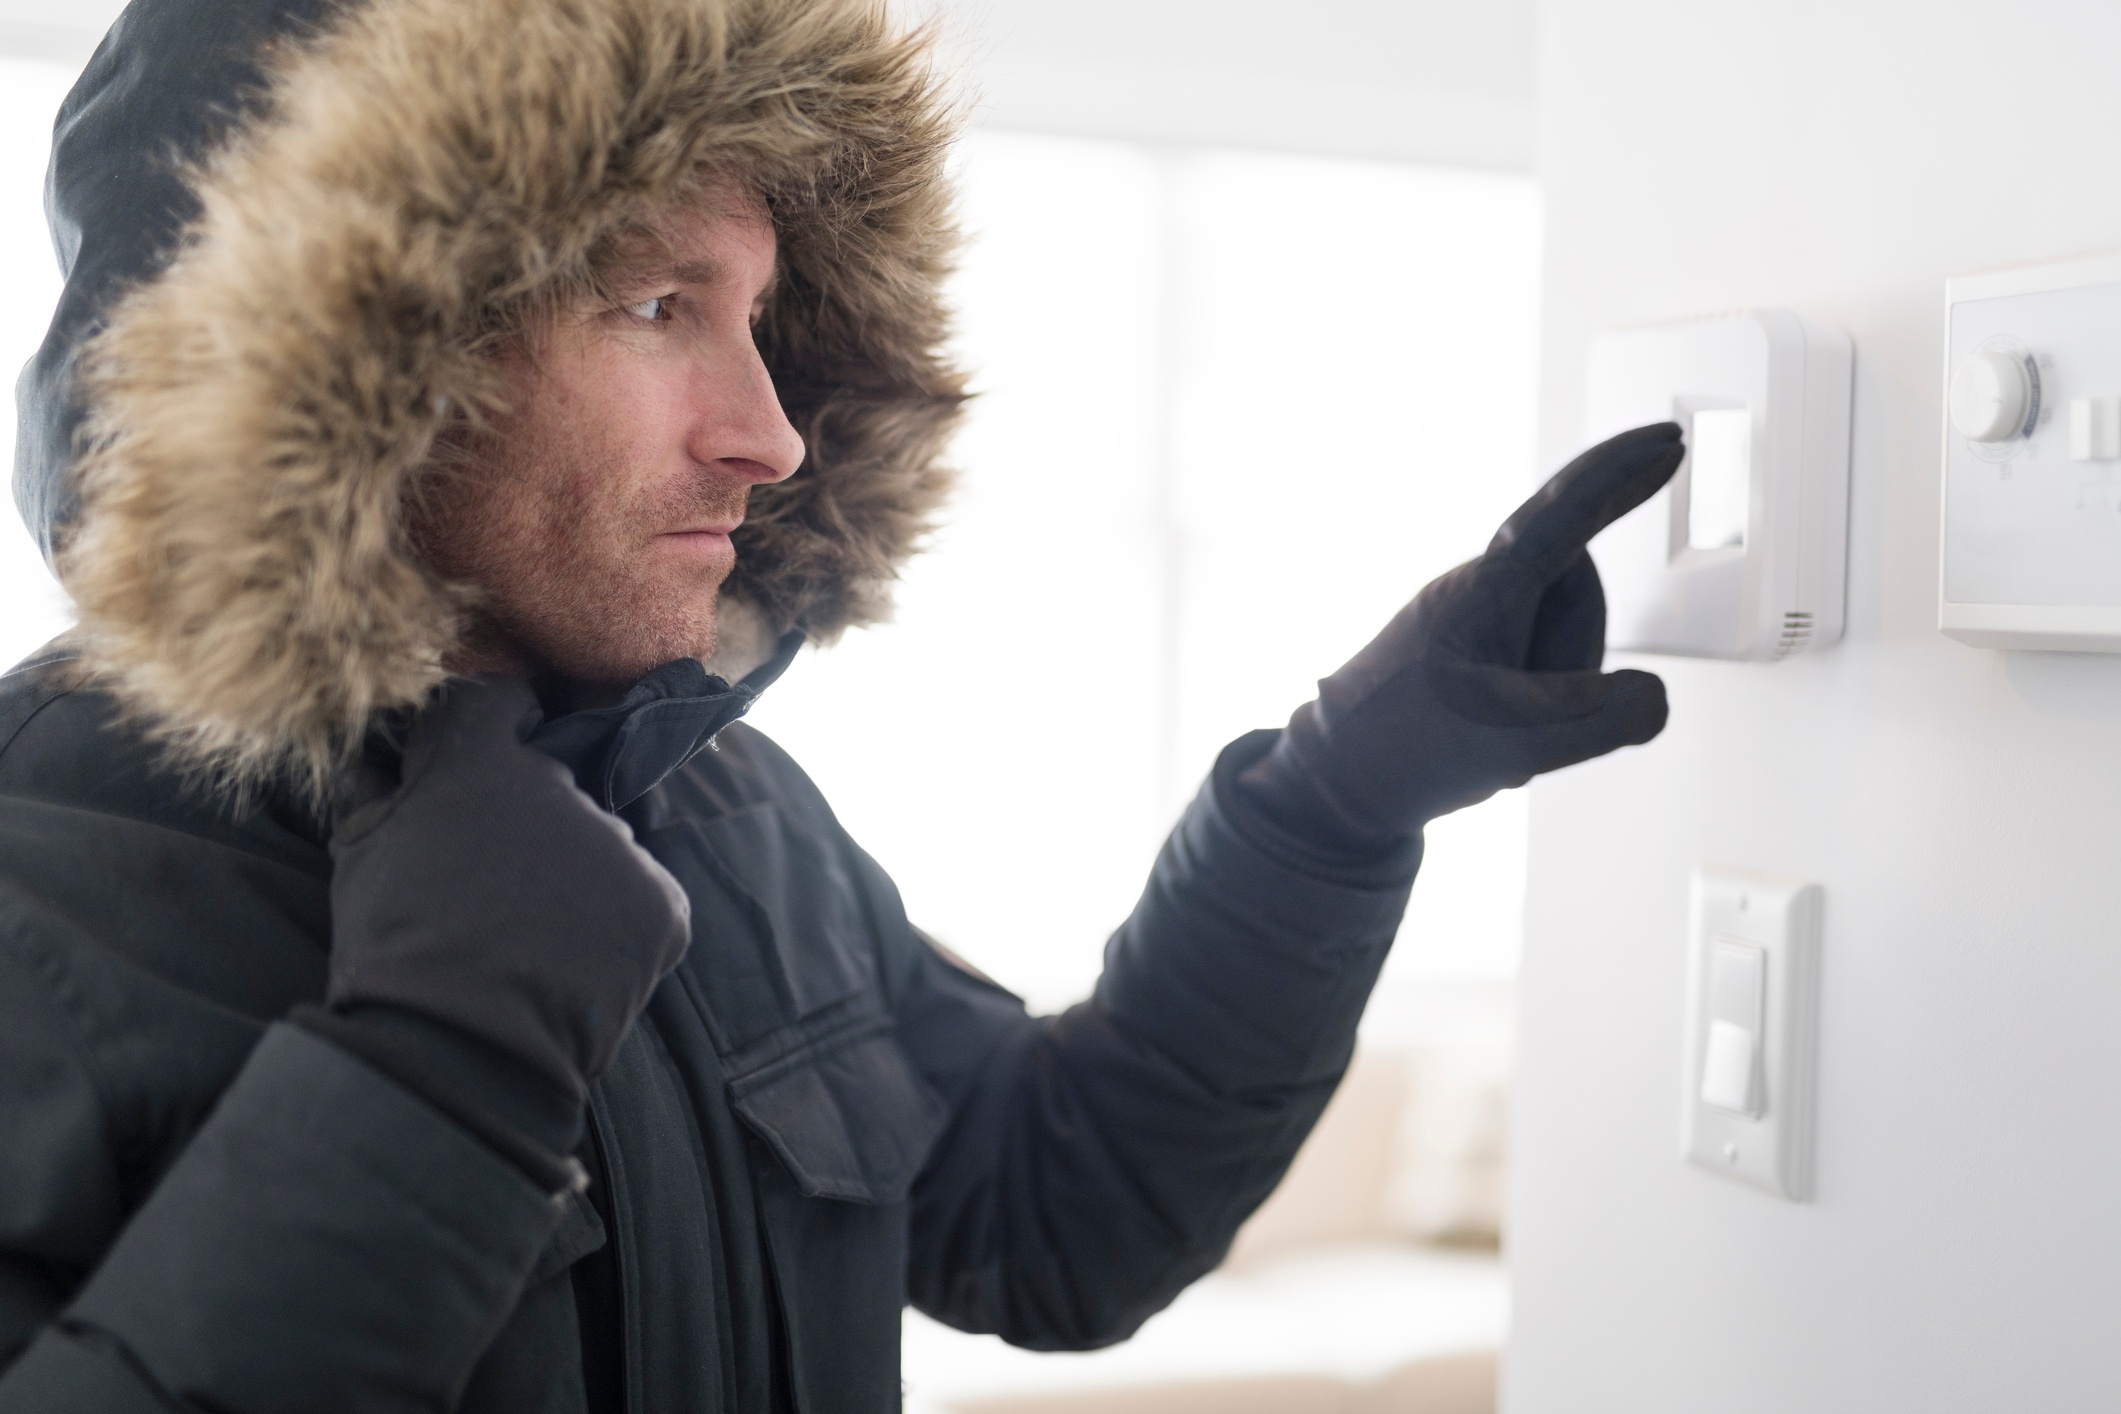 Honeywell Thermostat Won'T Go above 68 